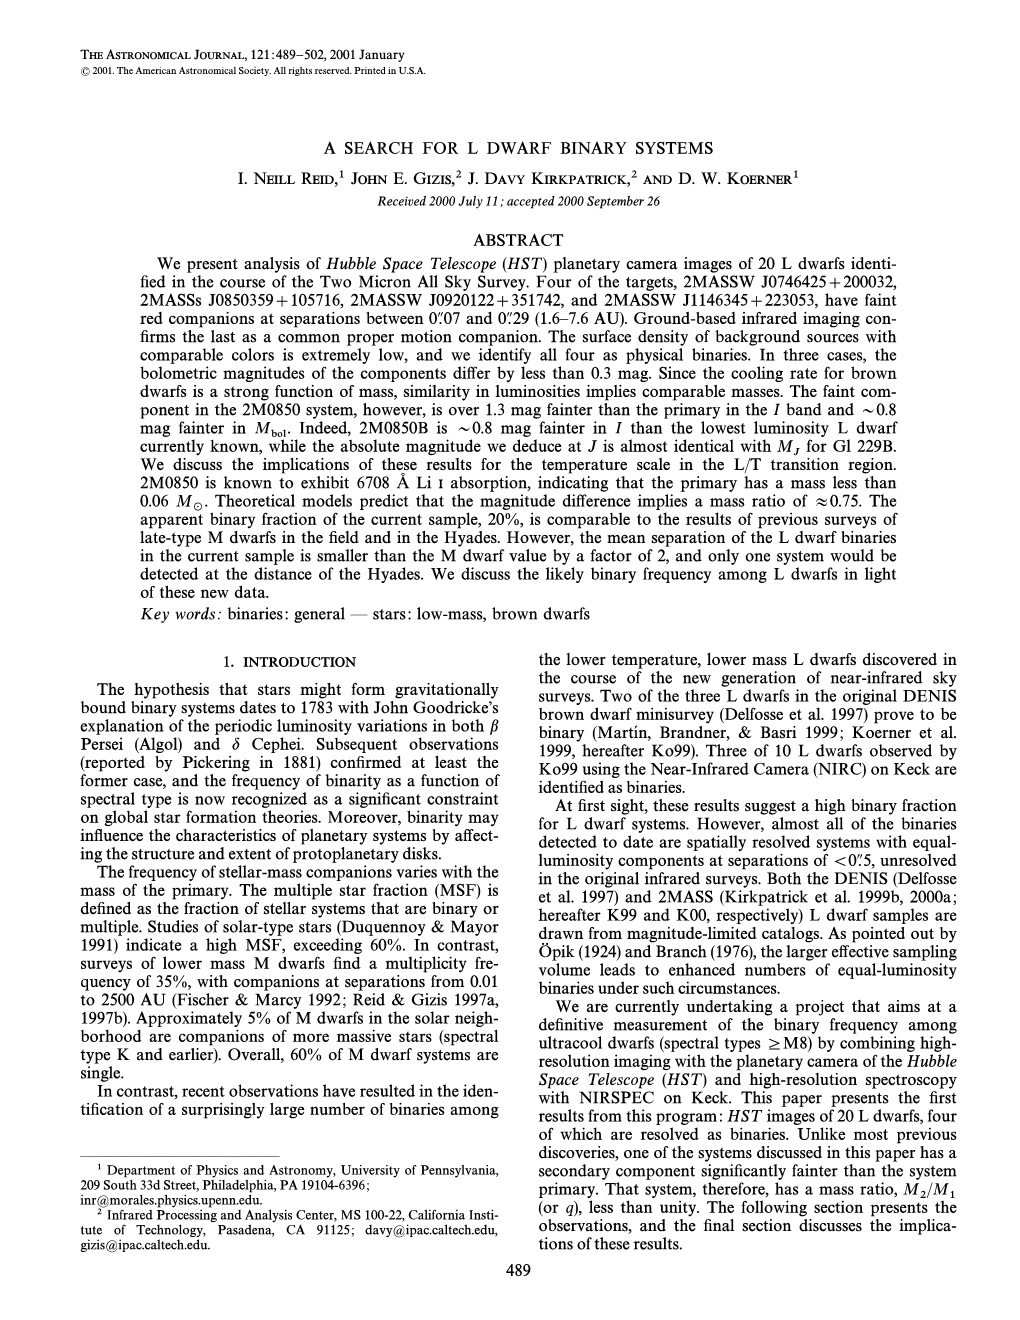 A Search for L Dwarf Binary Systems I. Neill Reid,1 John E. Gizis,2 J. Davy Kirkpatrick,2 and D